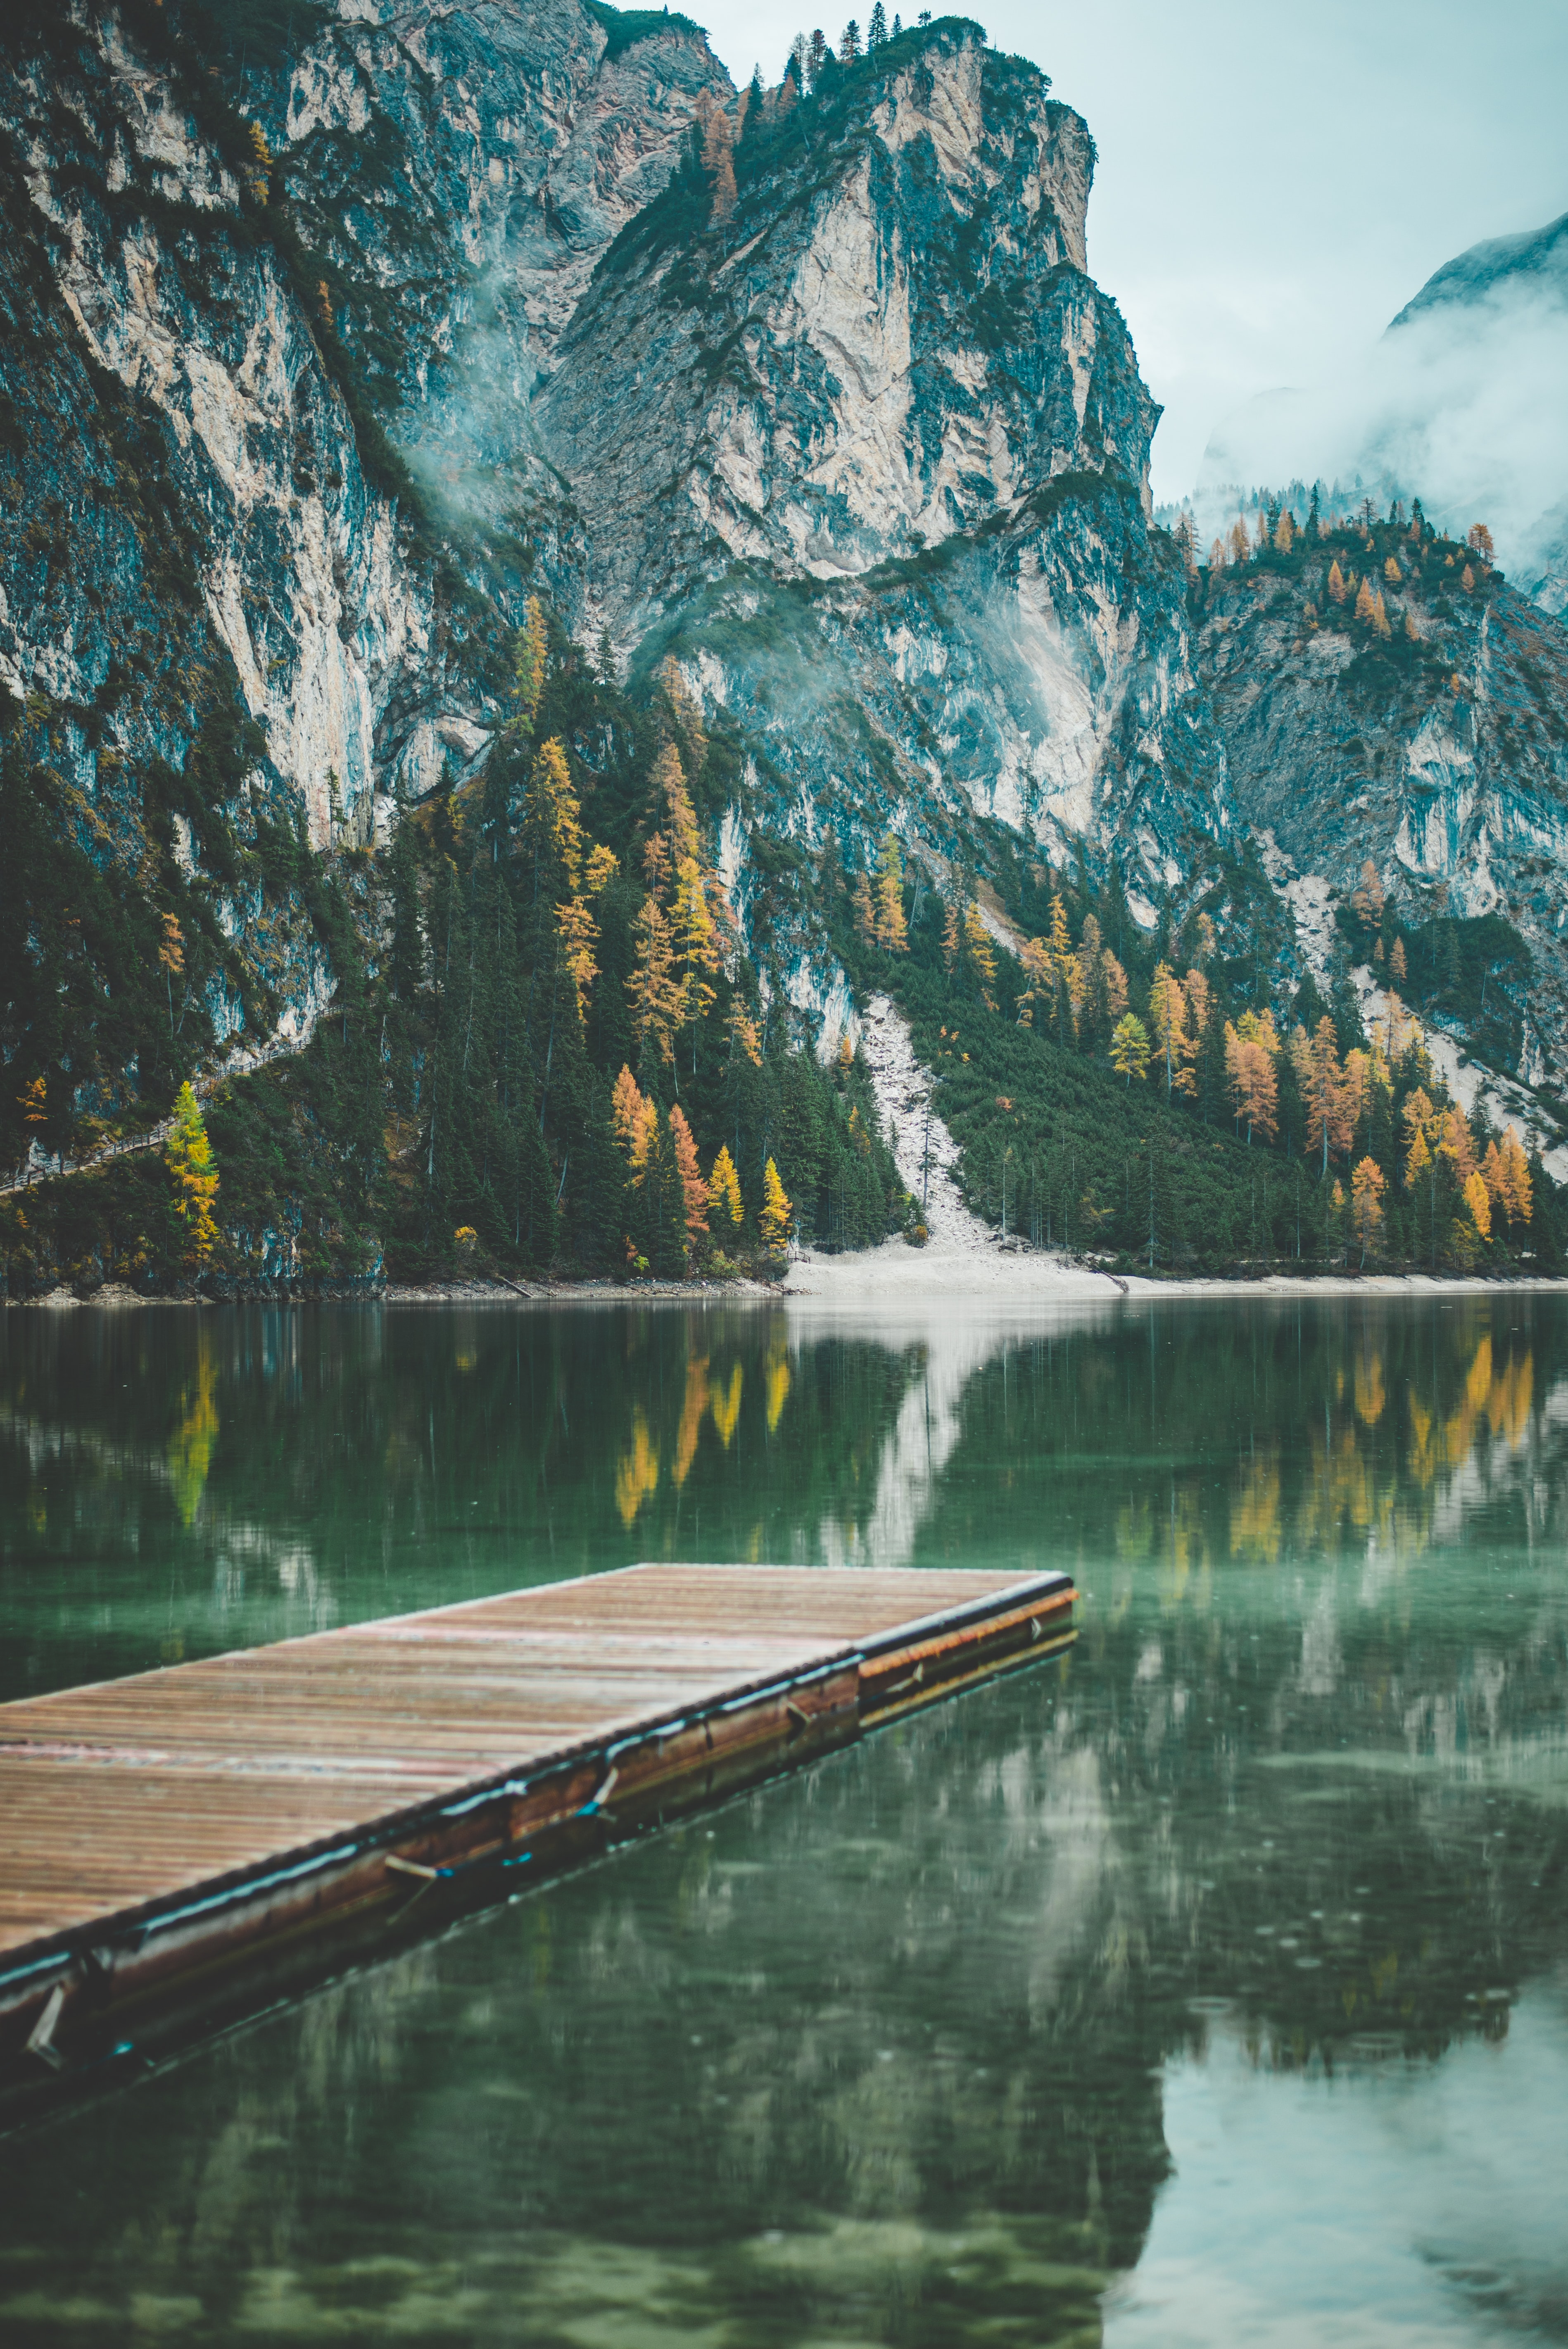 italy, mountains, pier, nature, trees, lake, reflection 1080p